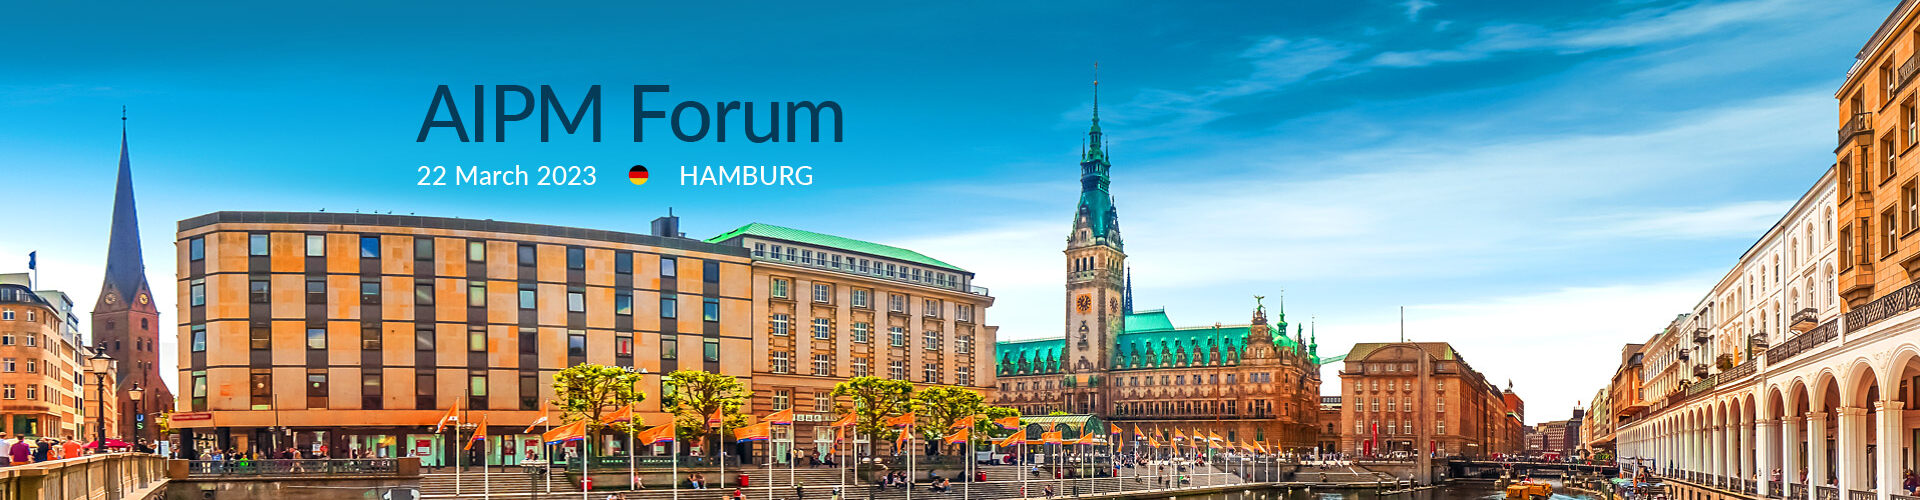 Event Hero Hamburg AIPM Forum - Copperleaf Decision Analytics